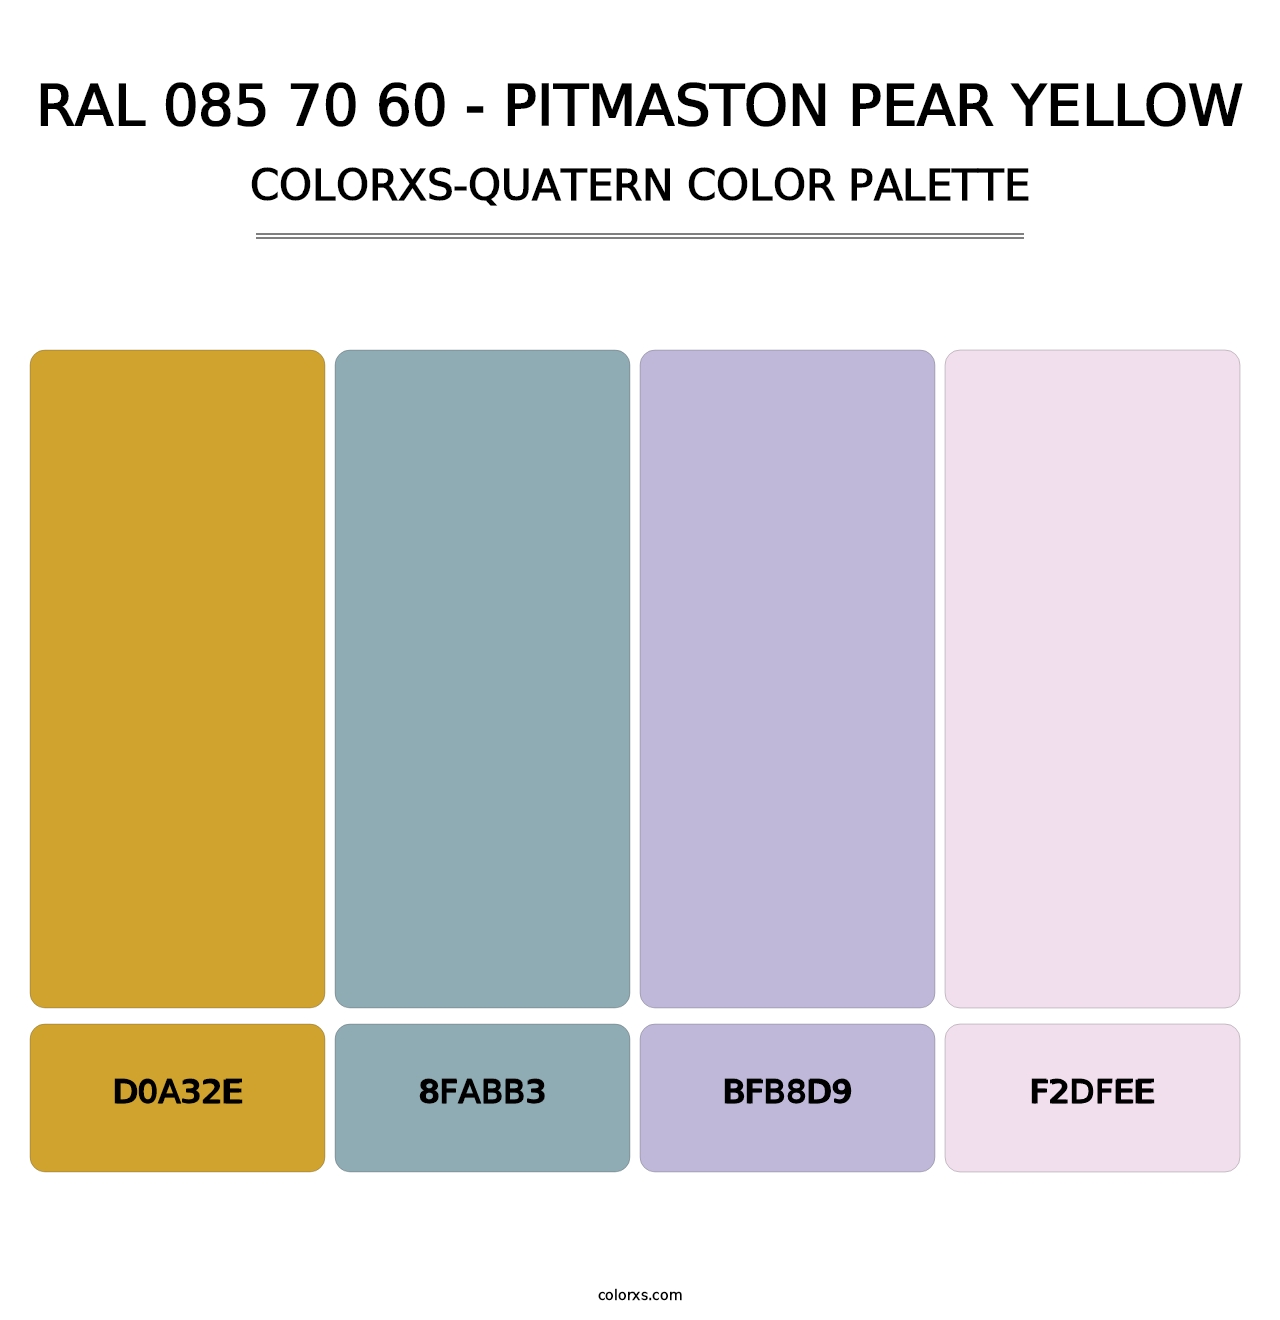 RAL 085 70 60 - Pitmaston Pear Yellow - Colorxs Quatern Palette